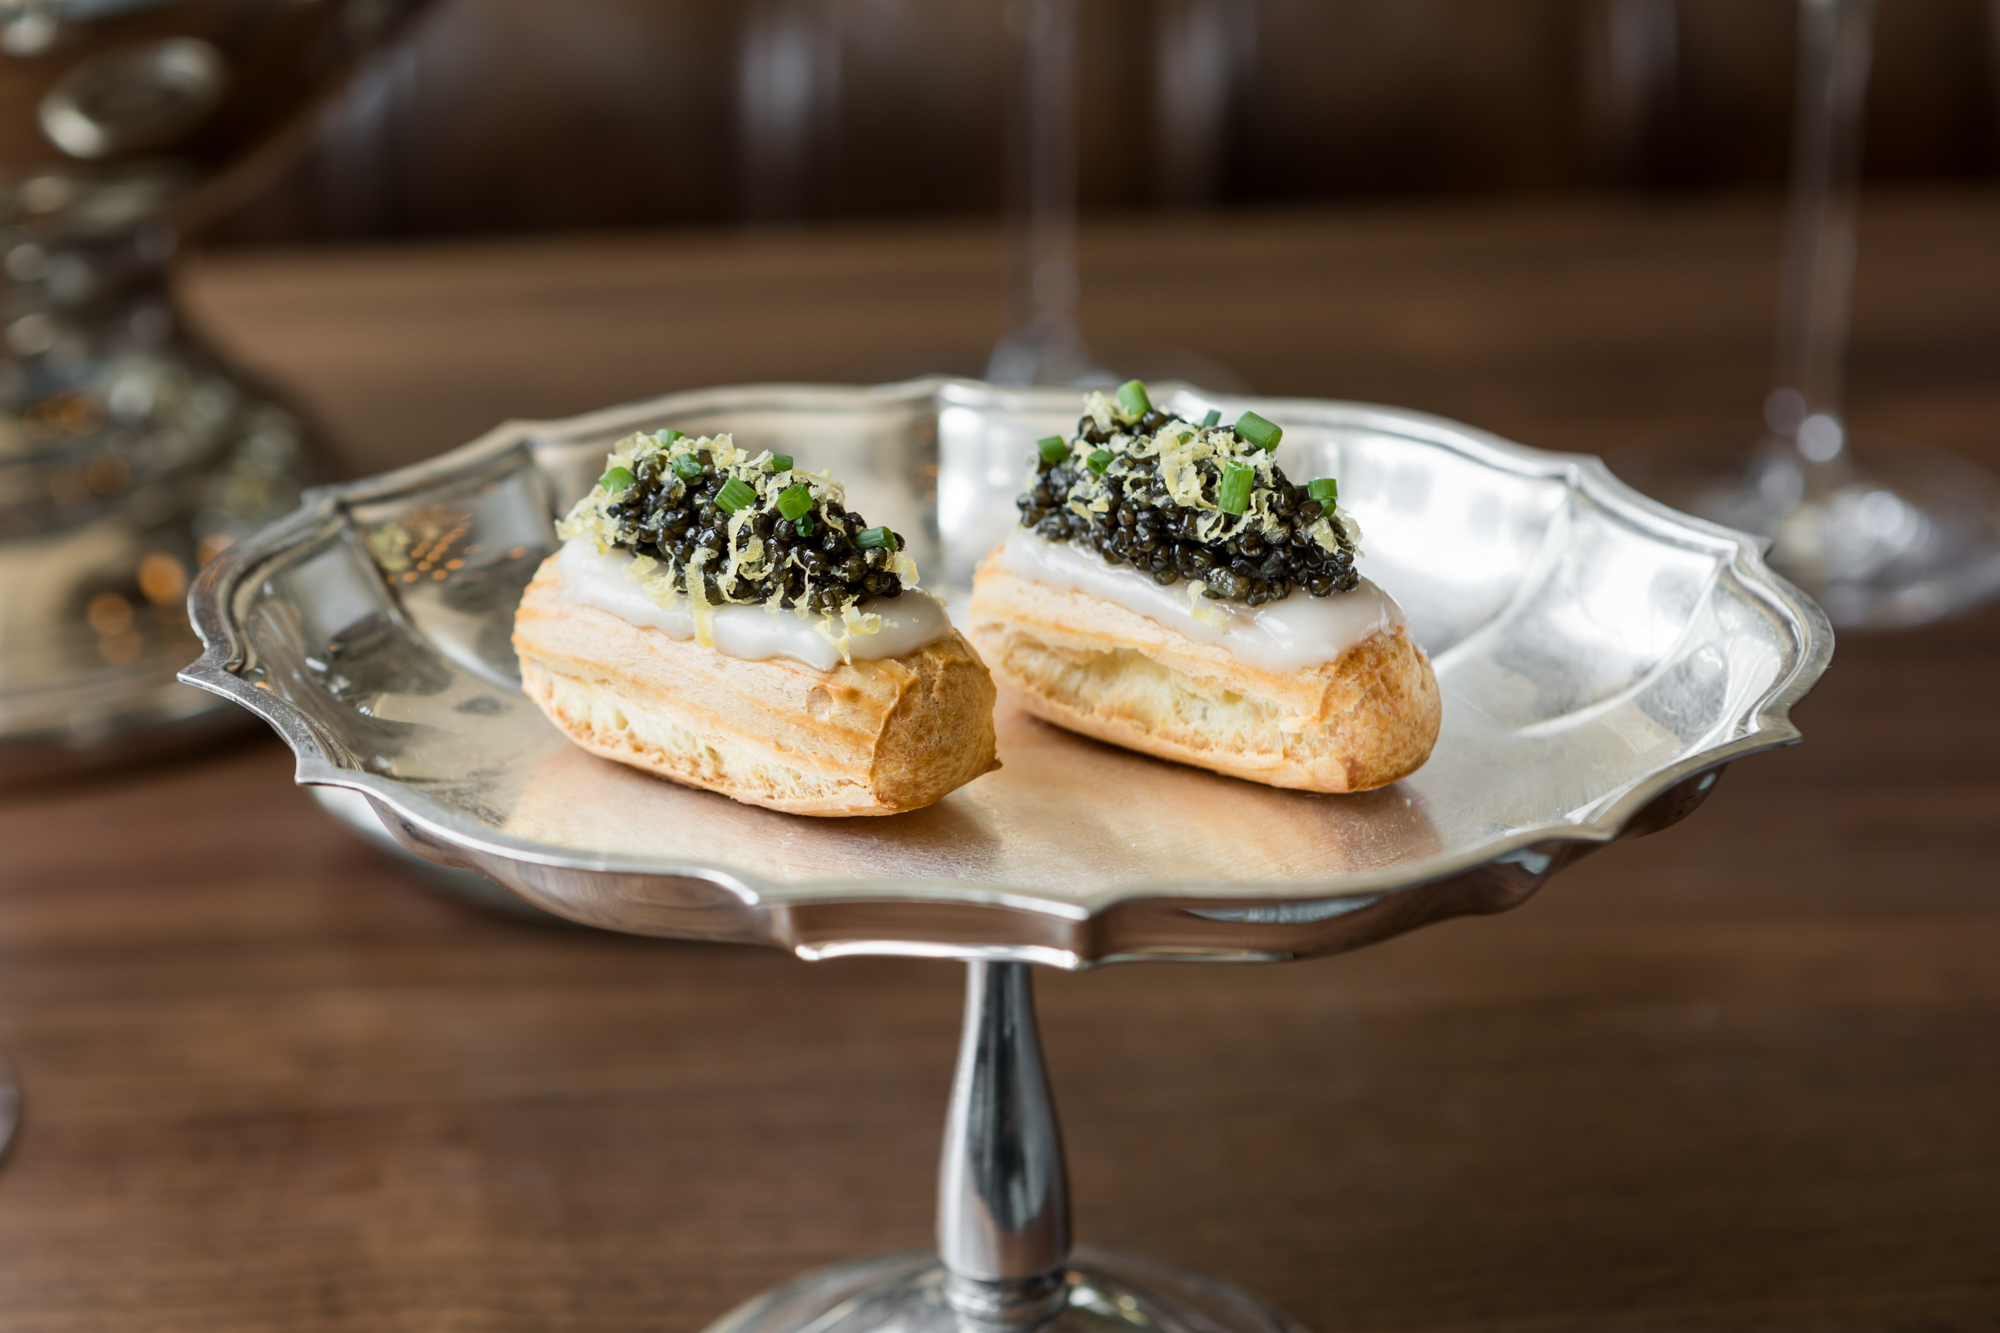 Caviar eclairs at Le Fantastique